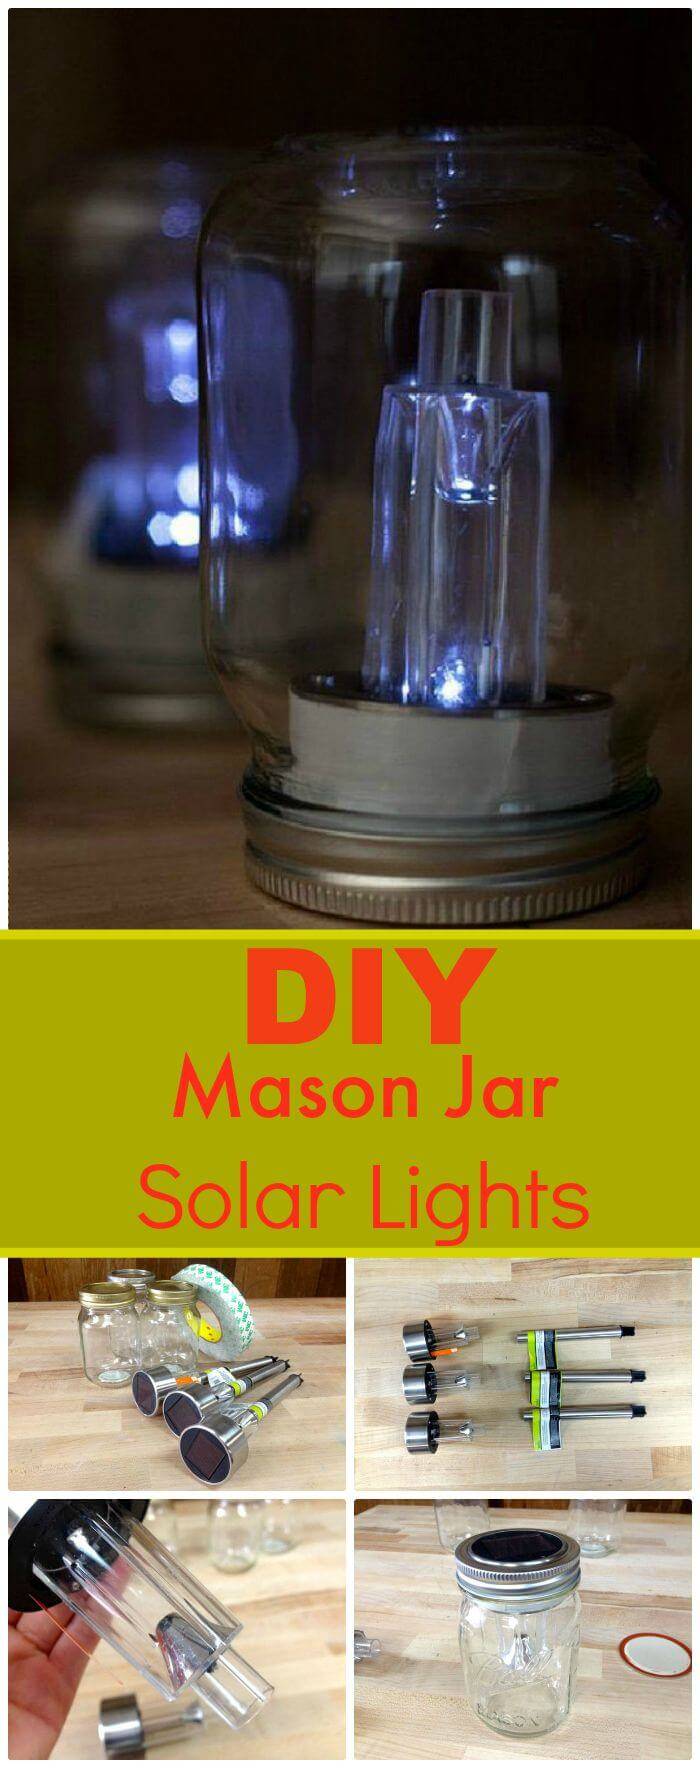 How To Make Mason Jar Solar Lights